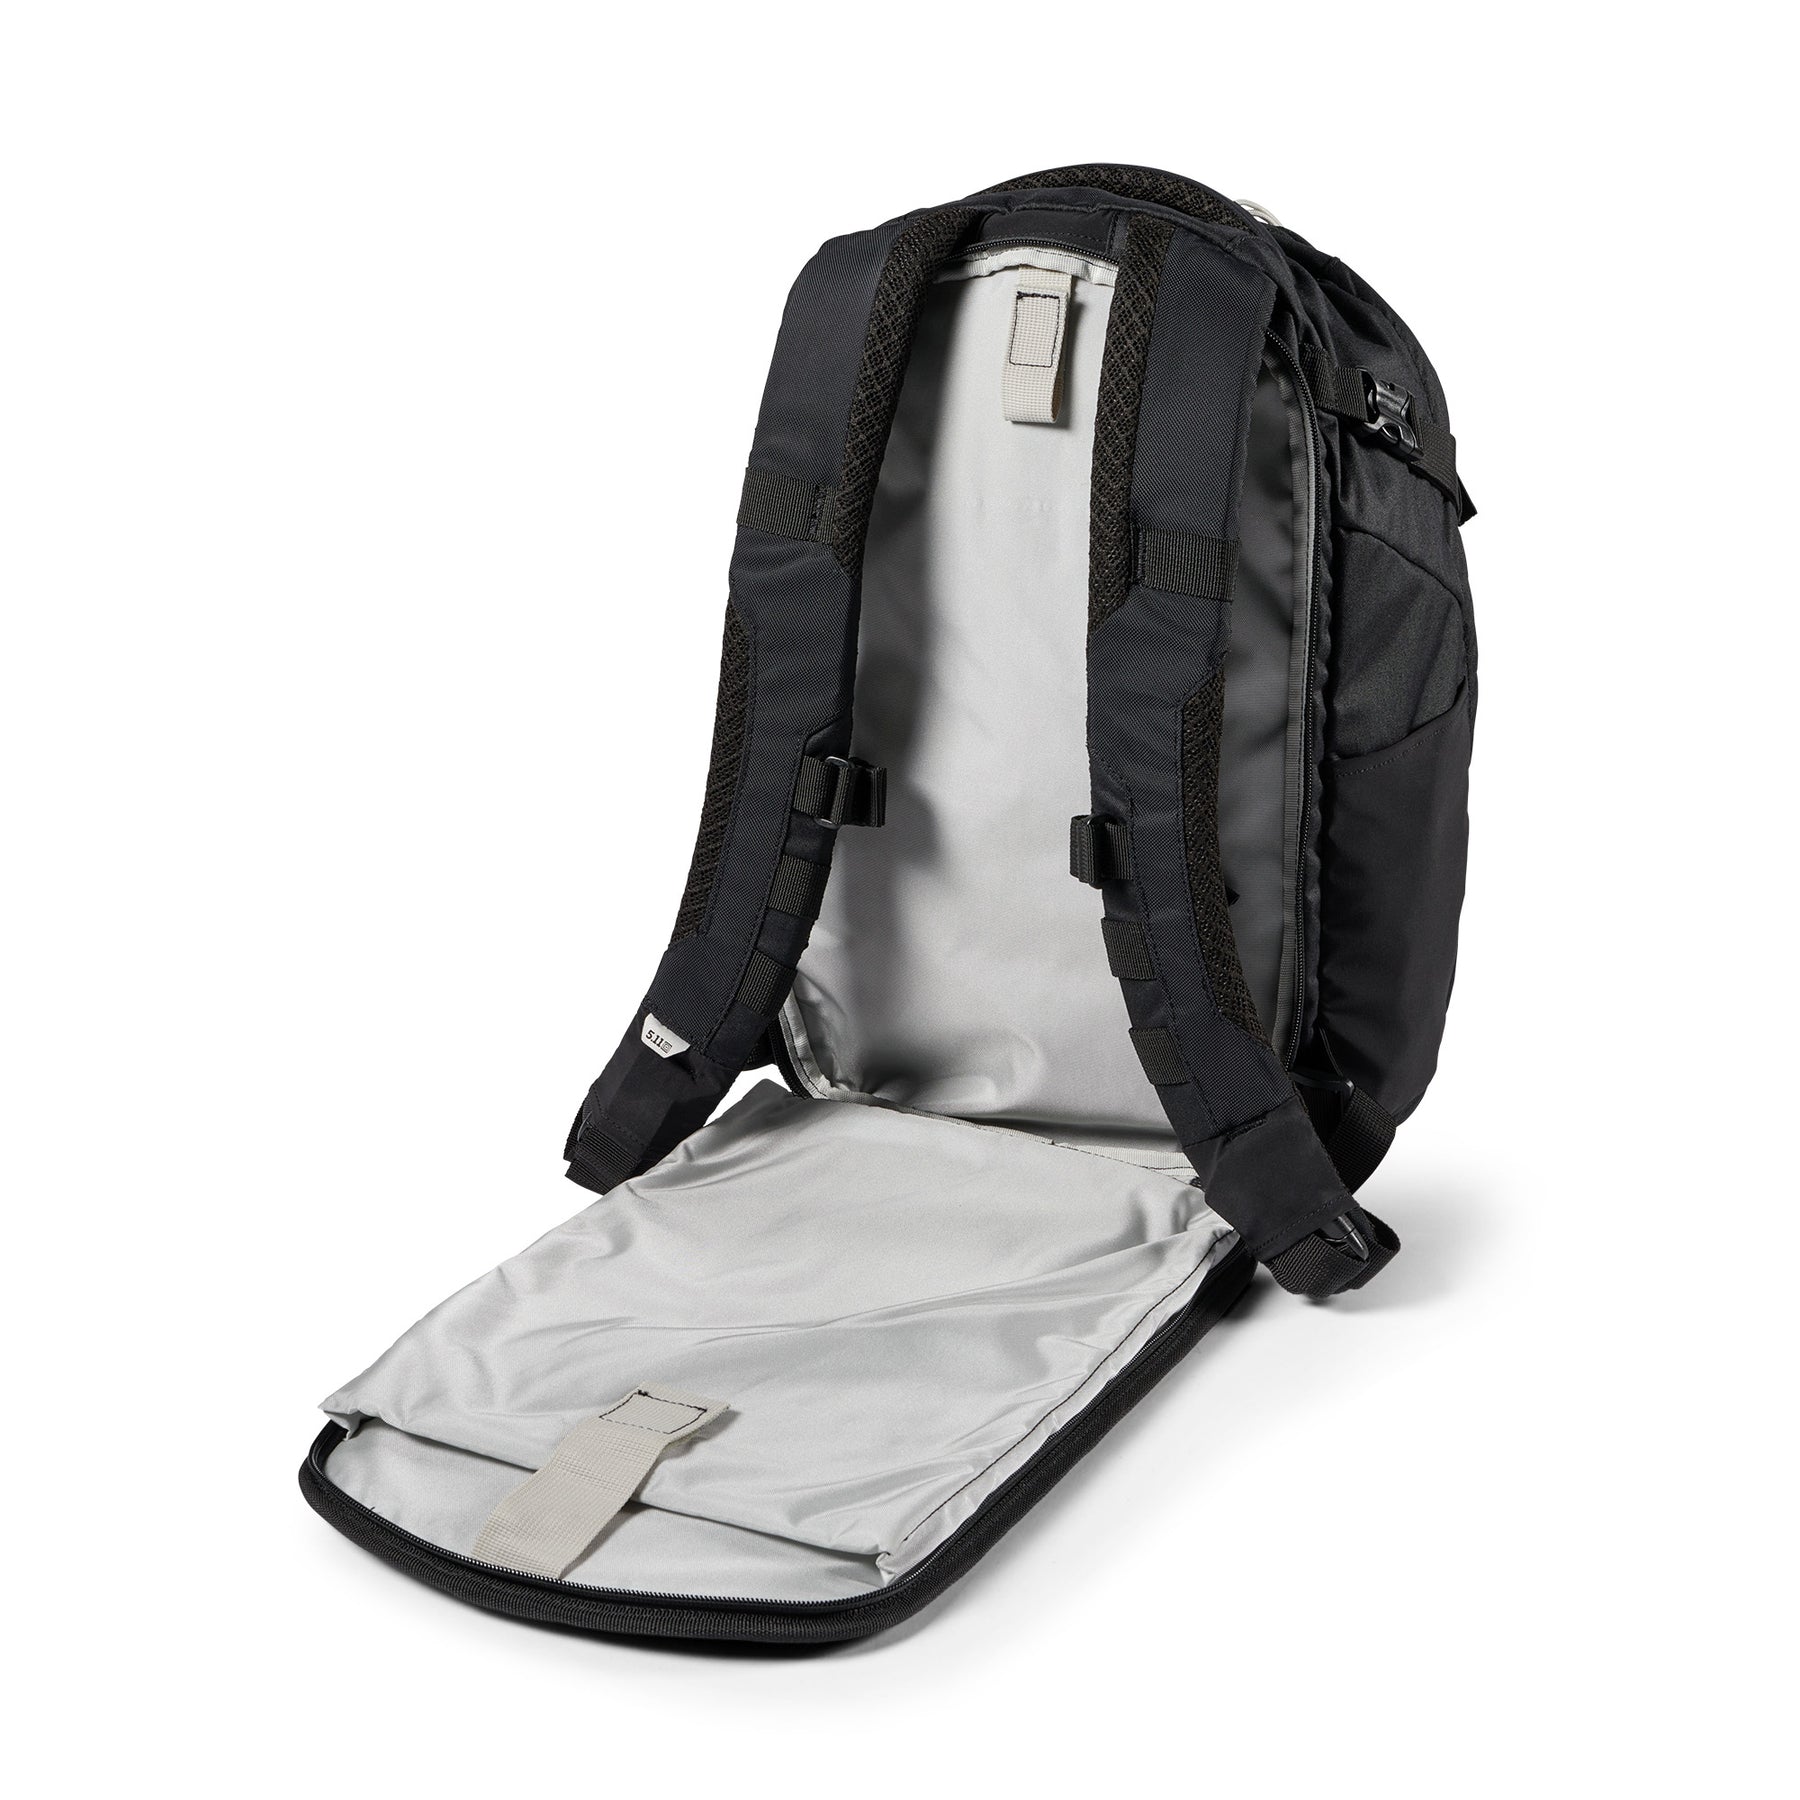 Zaino COVRT18 di 5.11 nero - vista tasca laptop e sacca idrica